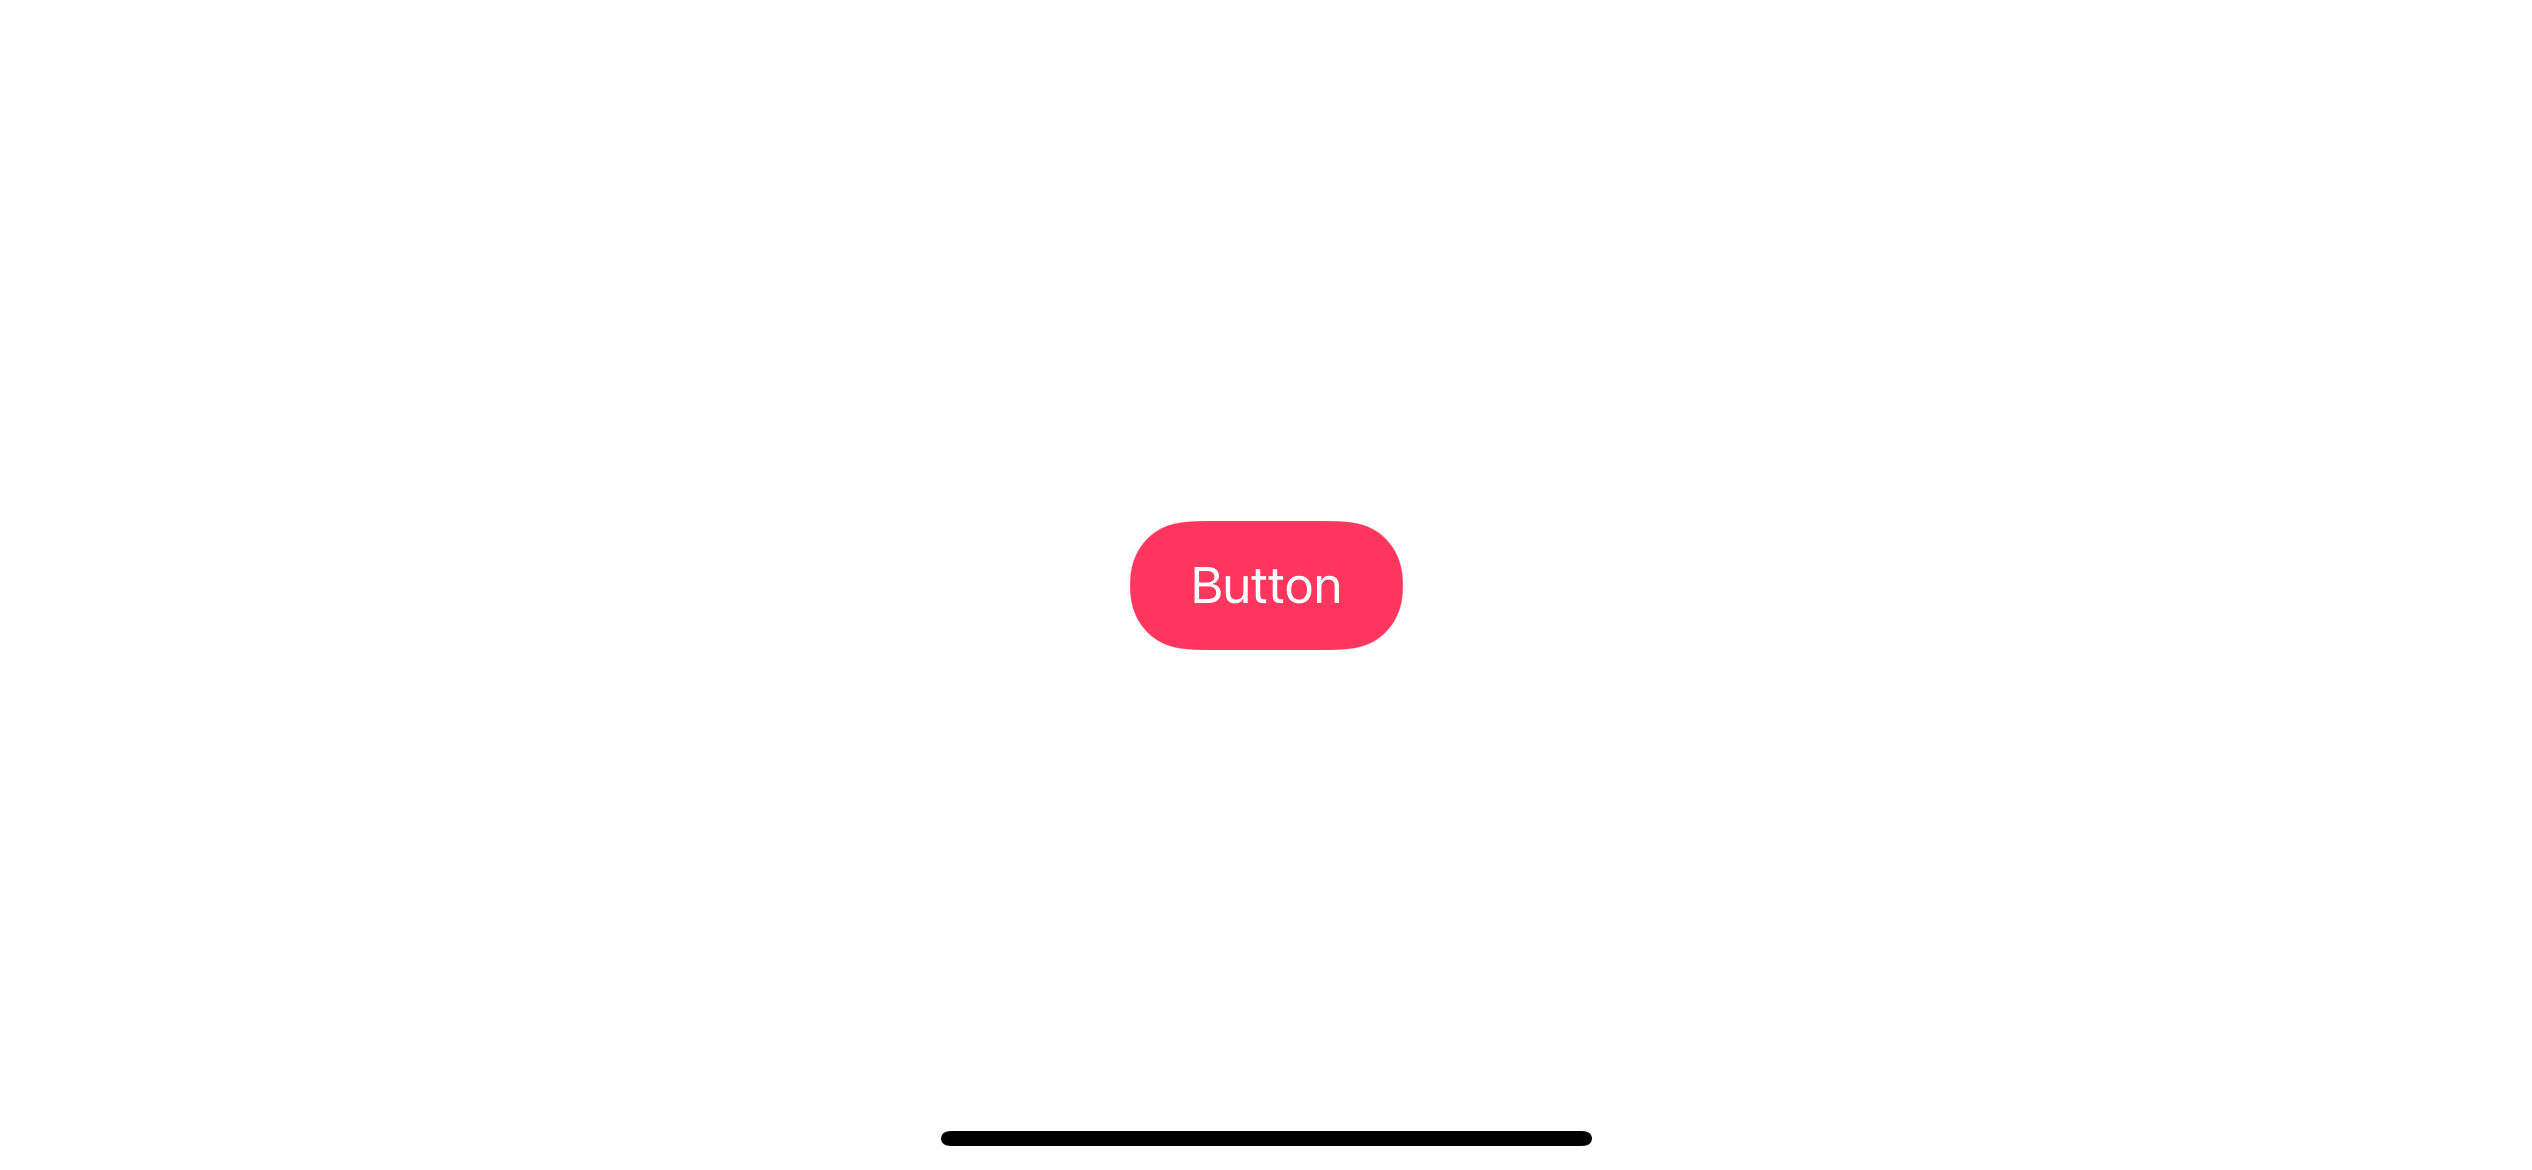 A button with a custom border-radius.